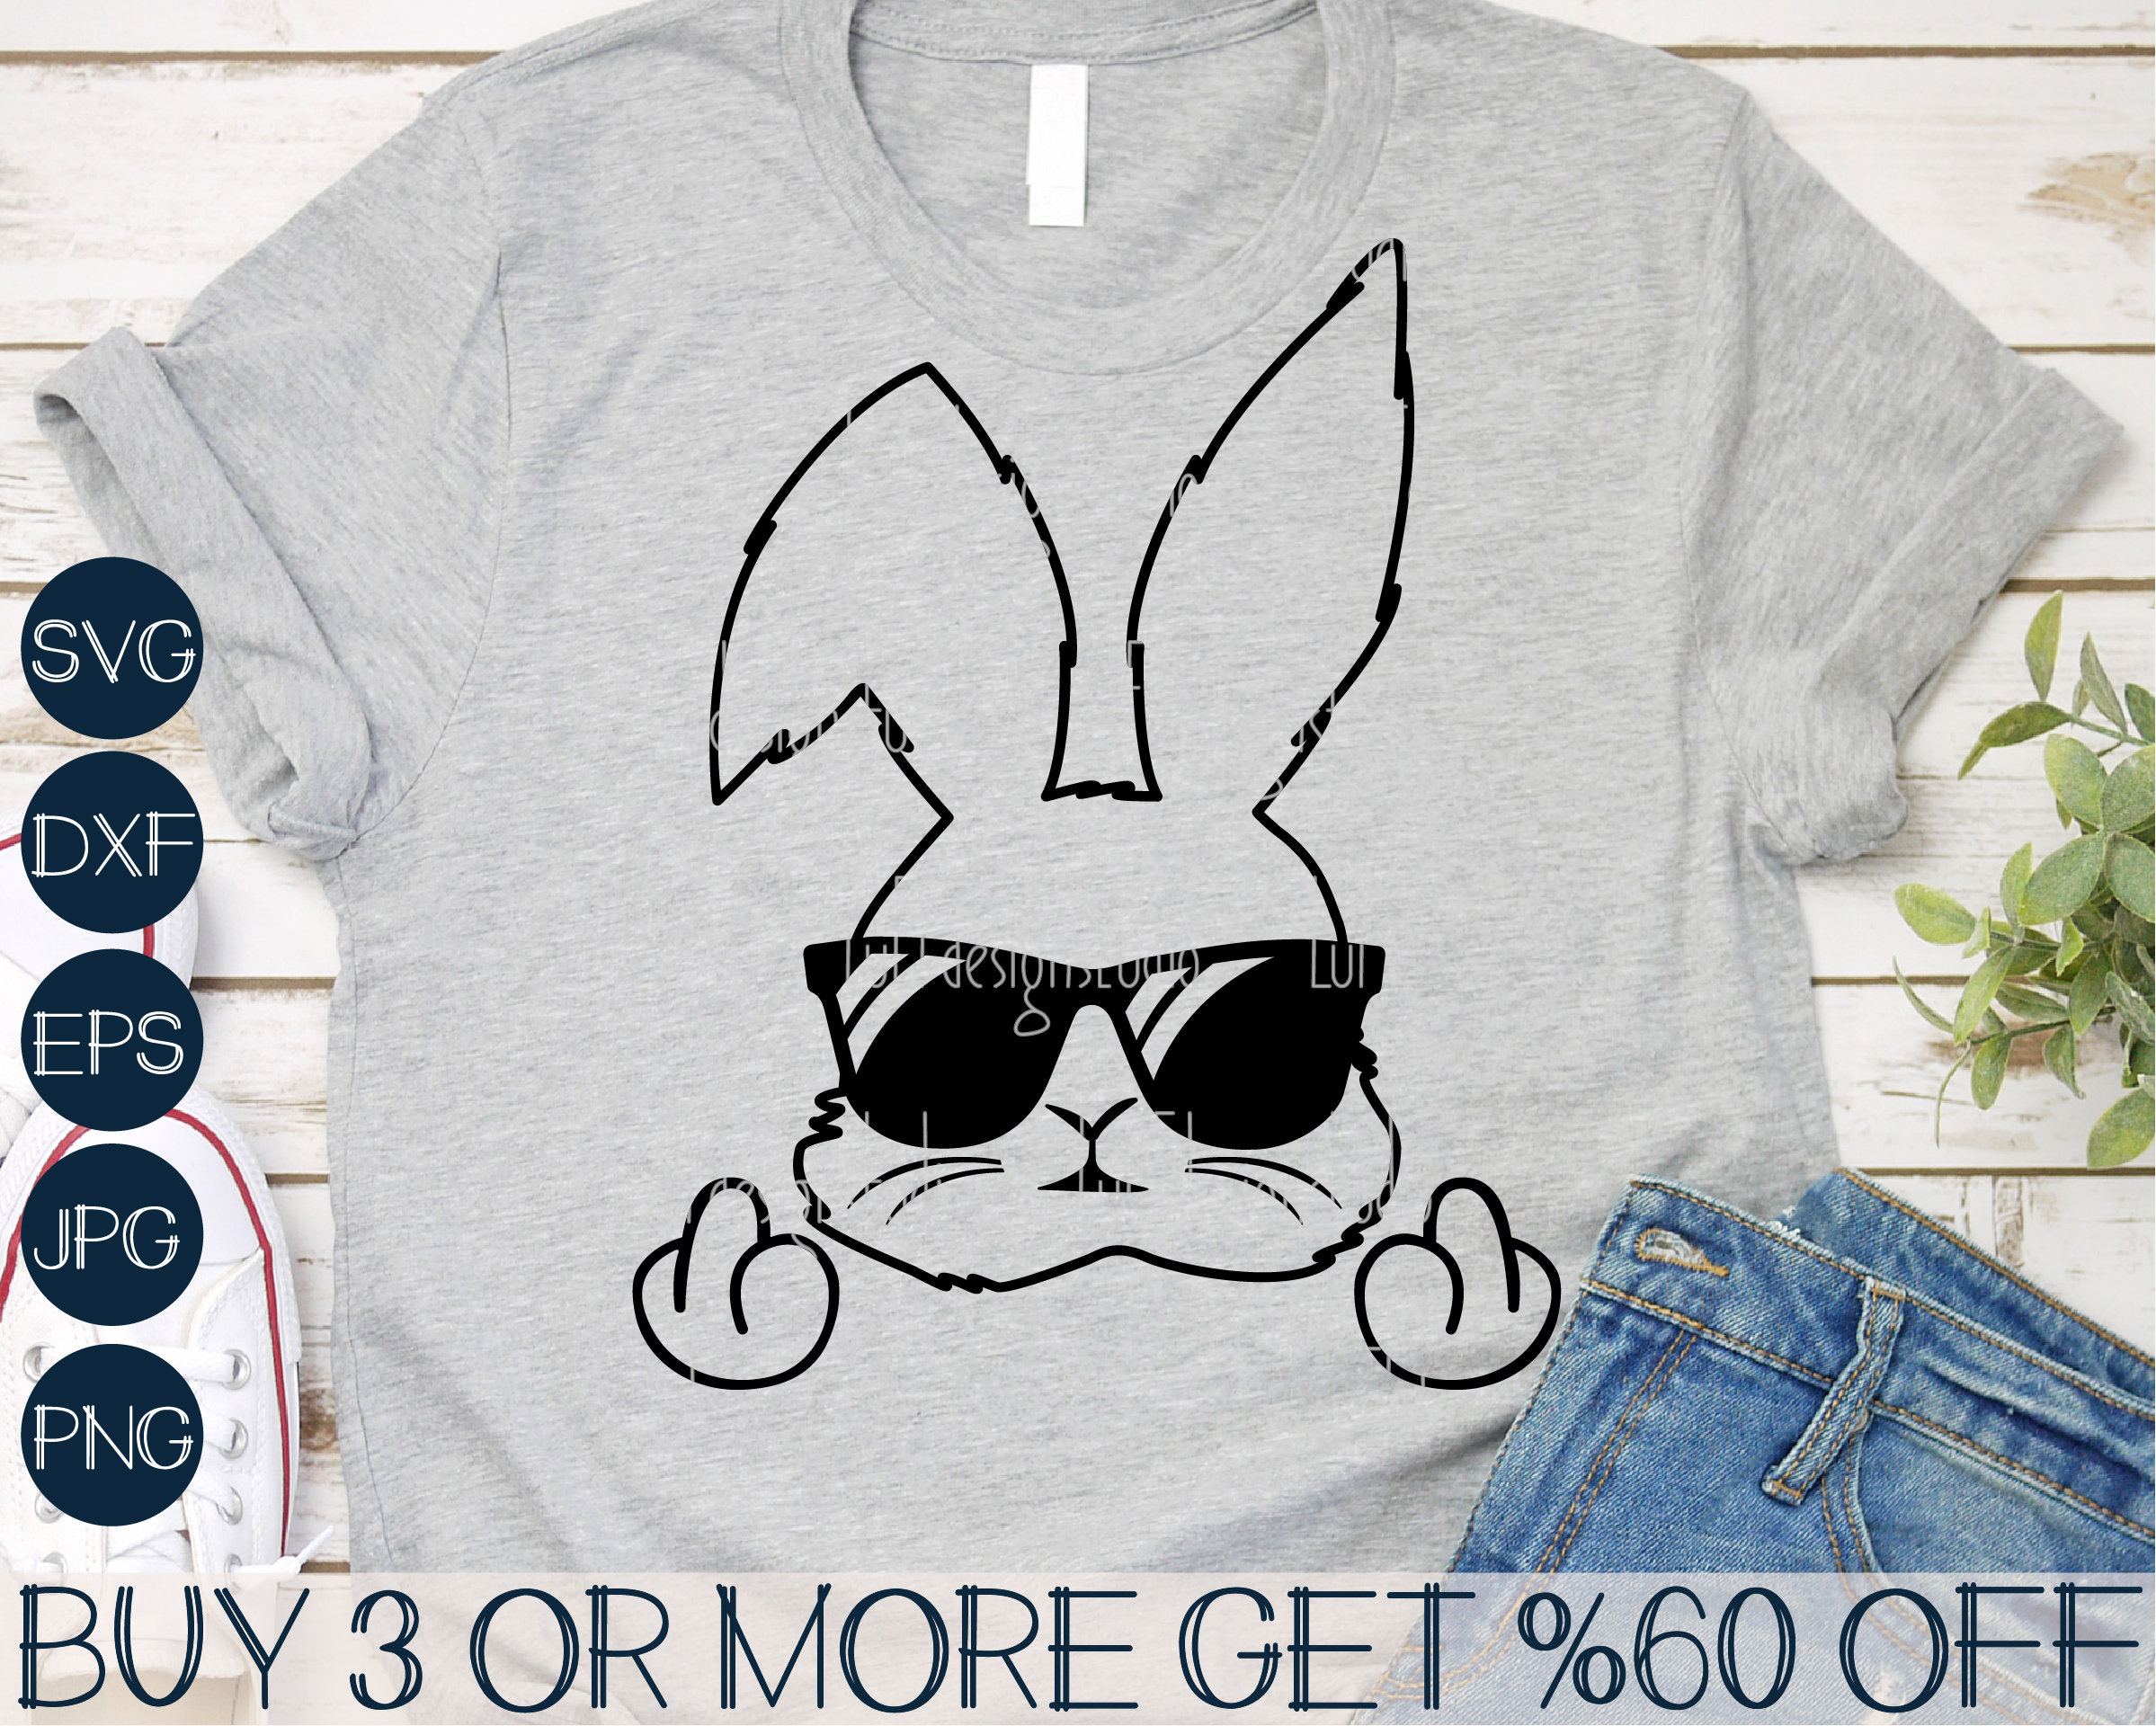 Rabbit bugs bunny louis vuitton t shirt - funnysayingtshirts